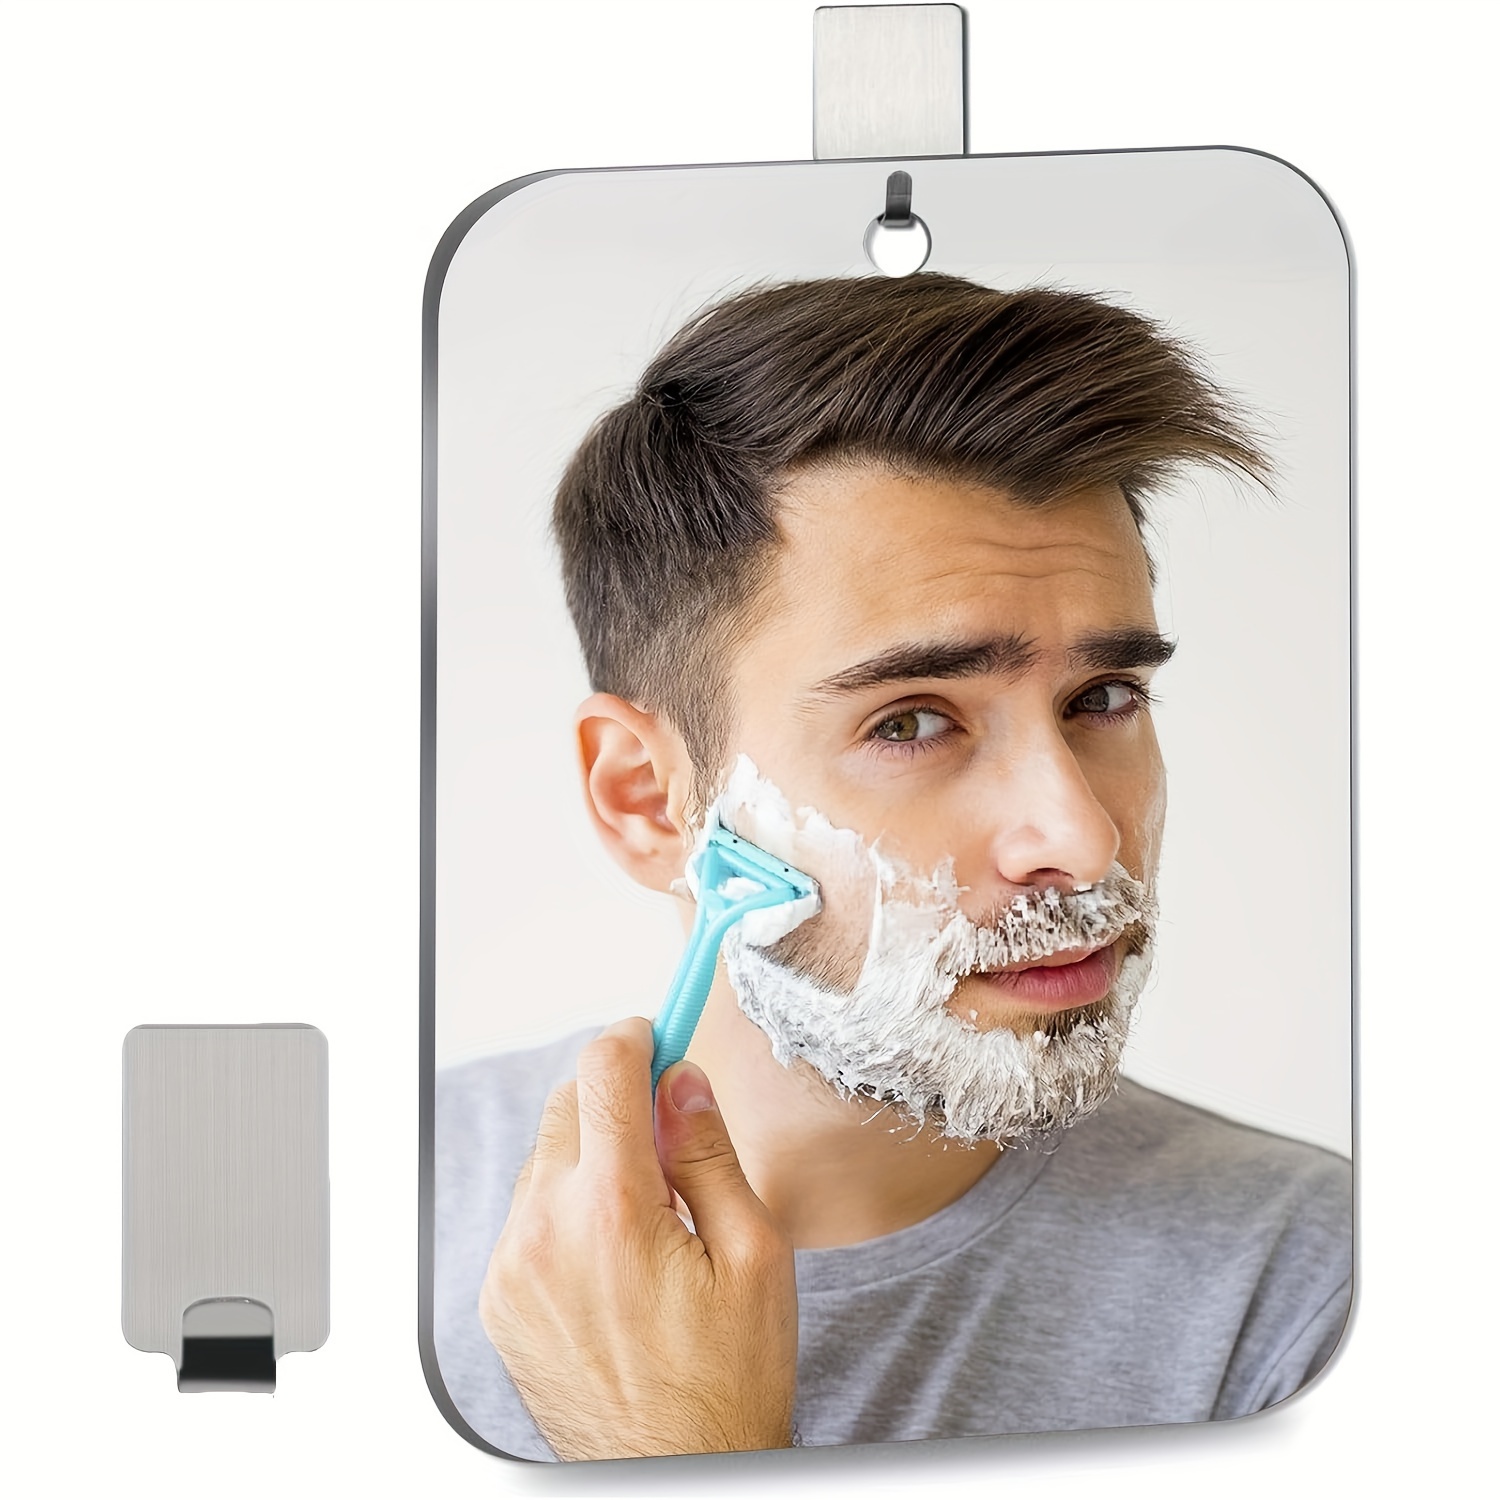 

Fogless Shower Shaving Mirror With Hook, Wall-mounted Medium Bathroom Makeup Mirror, Frameless Portable Travel Camping Mirror, Shatterproof Handheld Quick-defog Plastic Mirror, Power-free